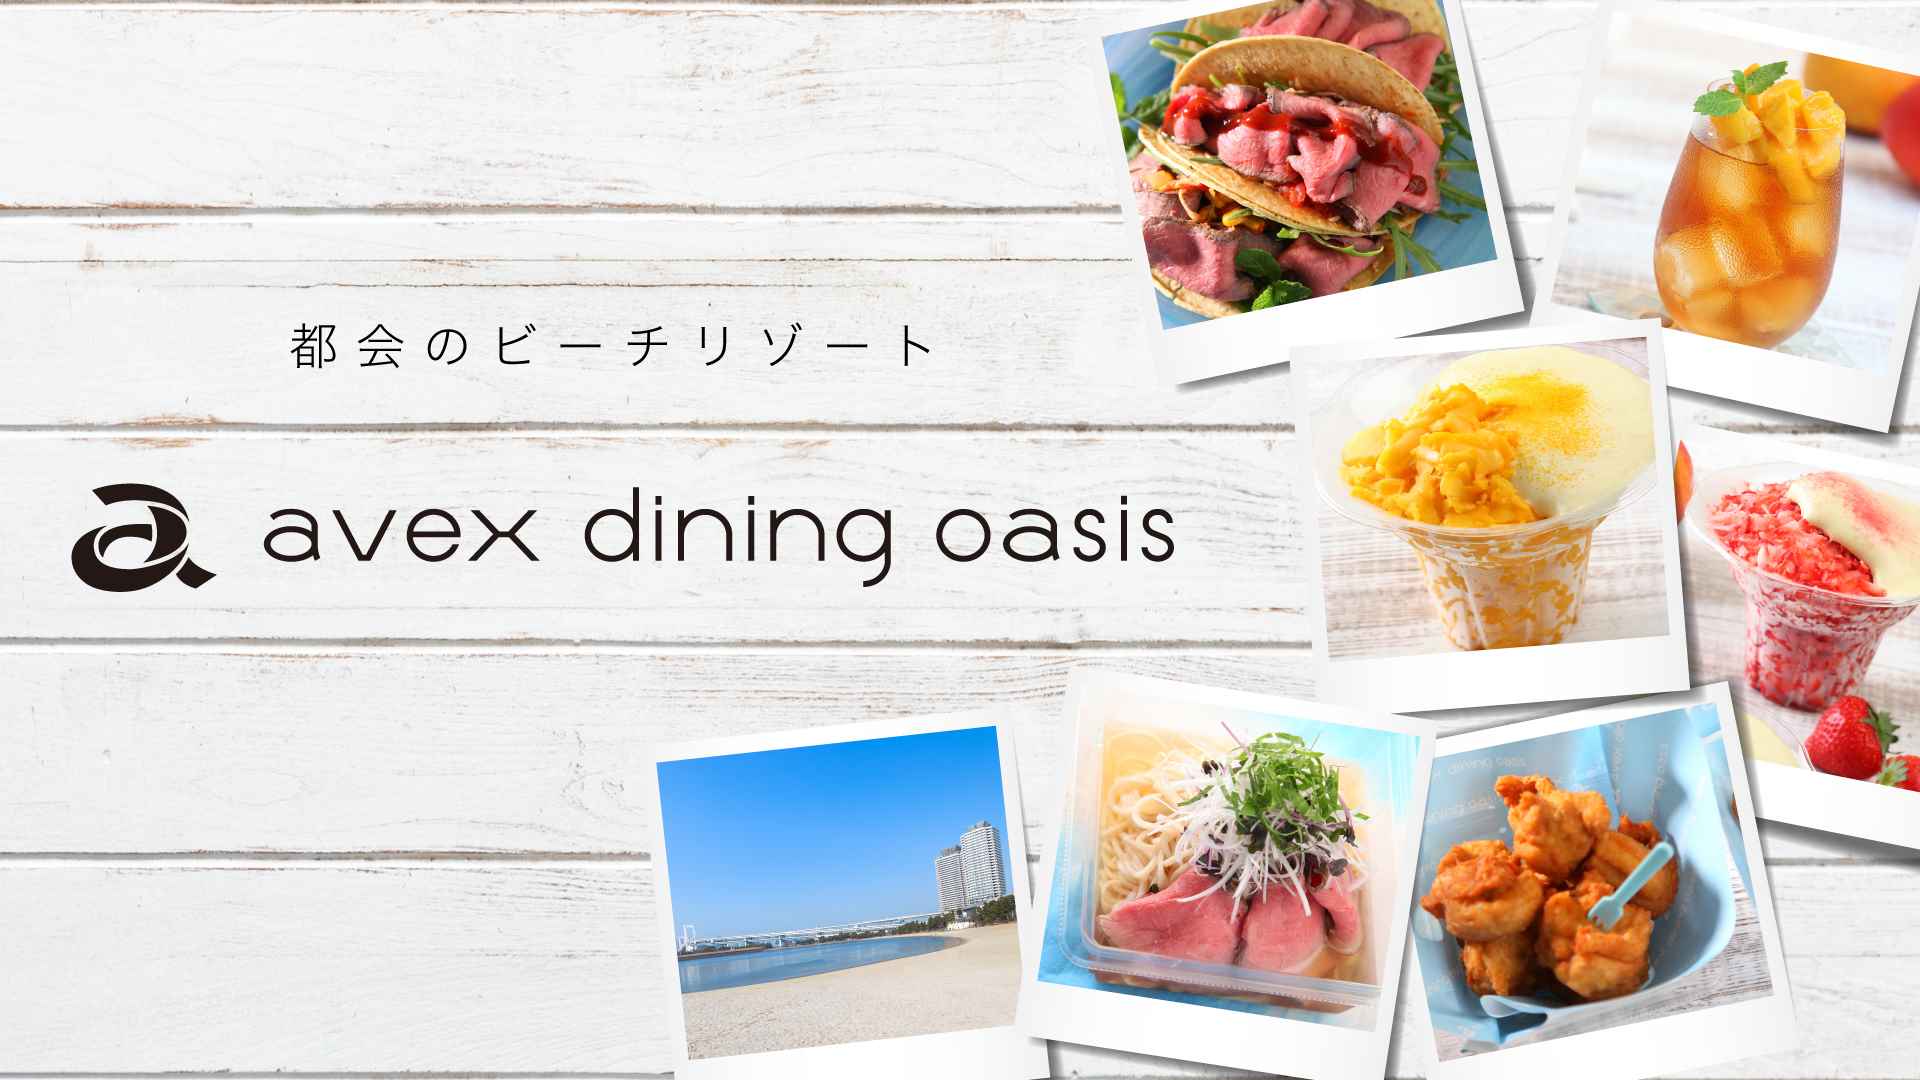 avex dining oasis-エイベックス・ダイニングオアシス-@デックス東京ビーチ